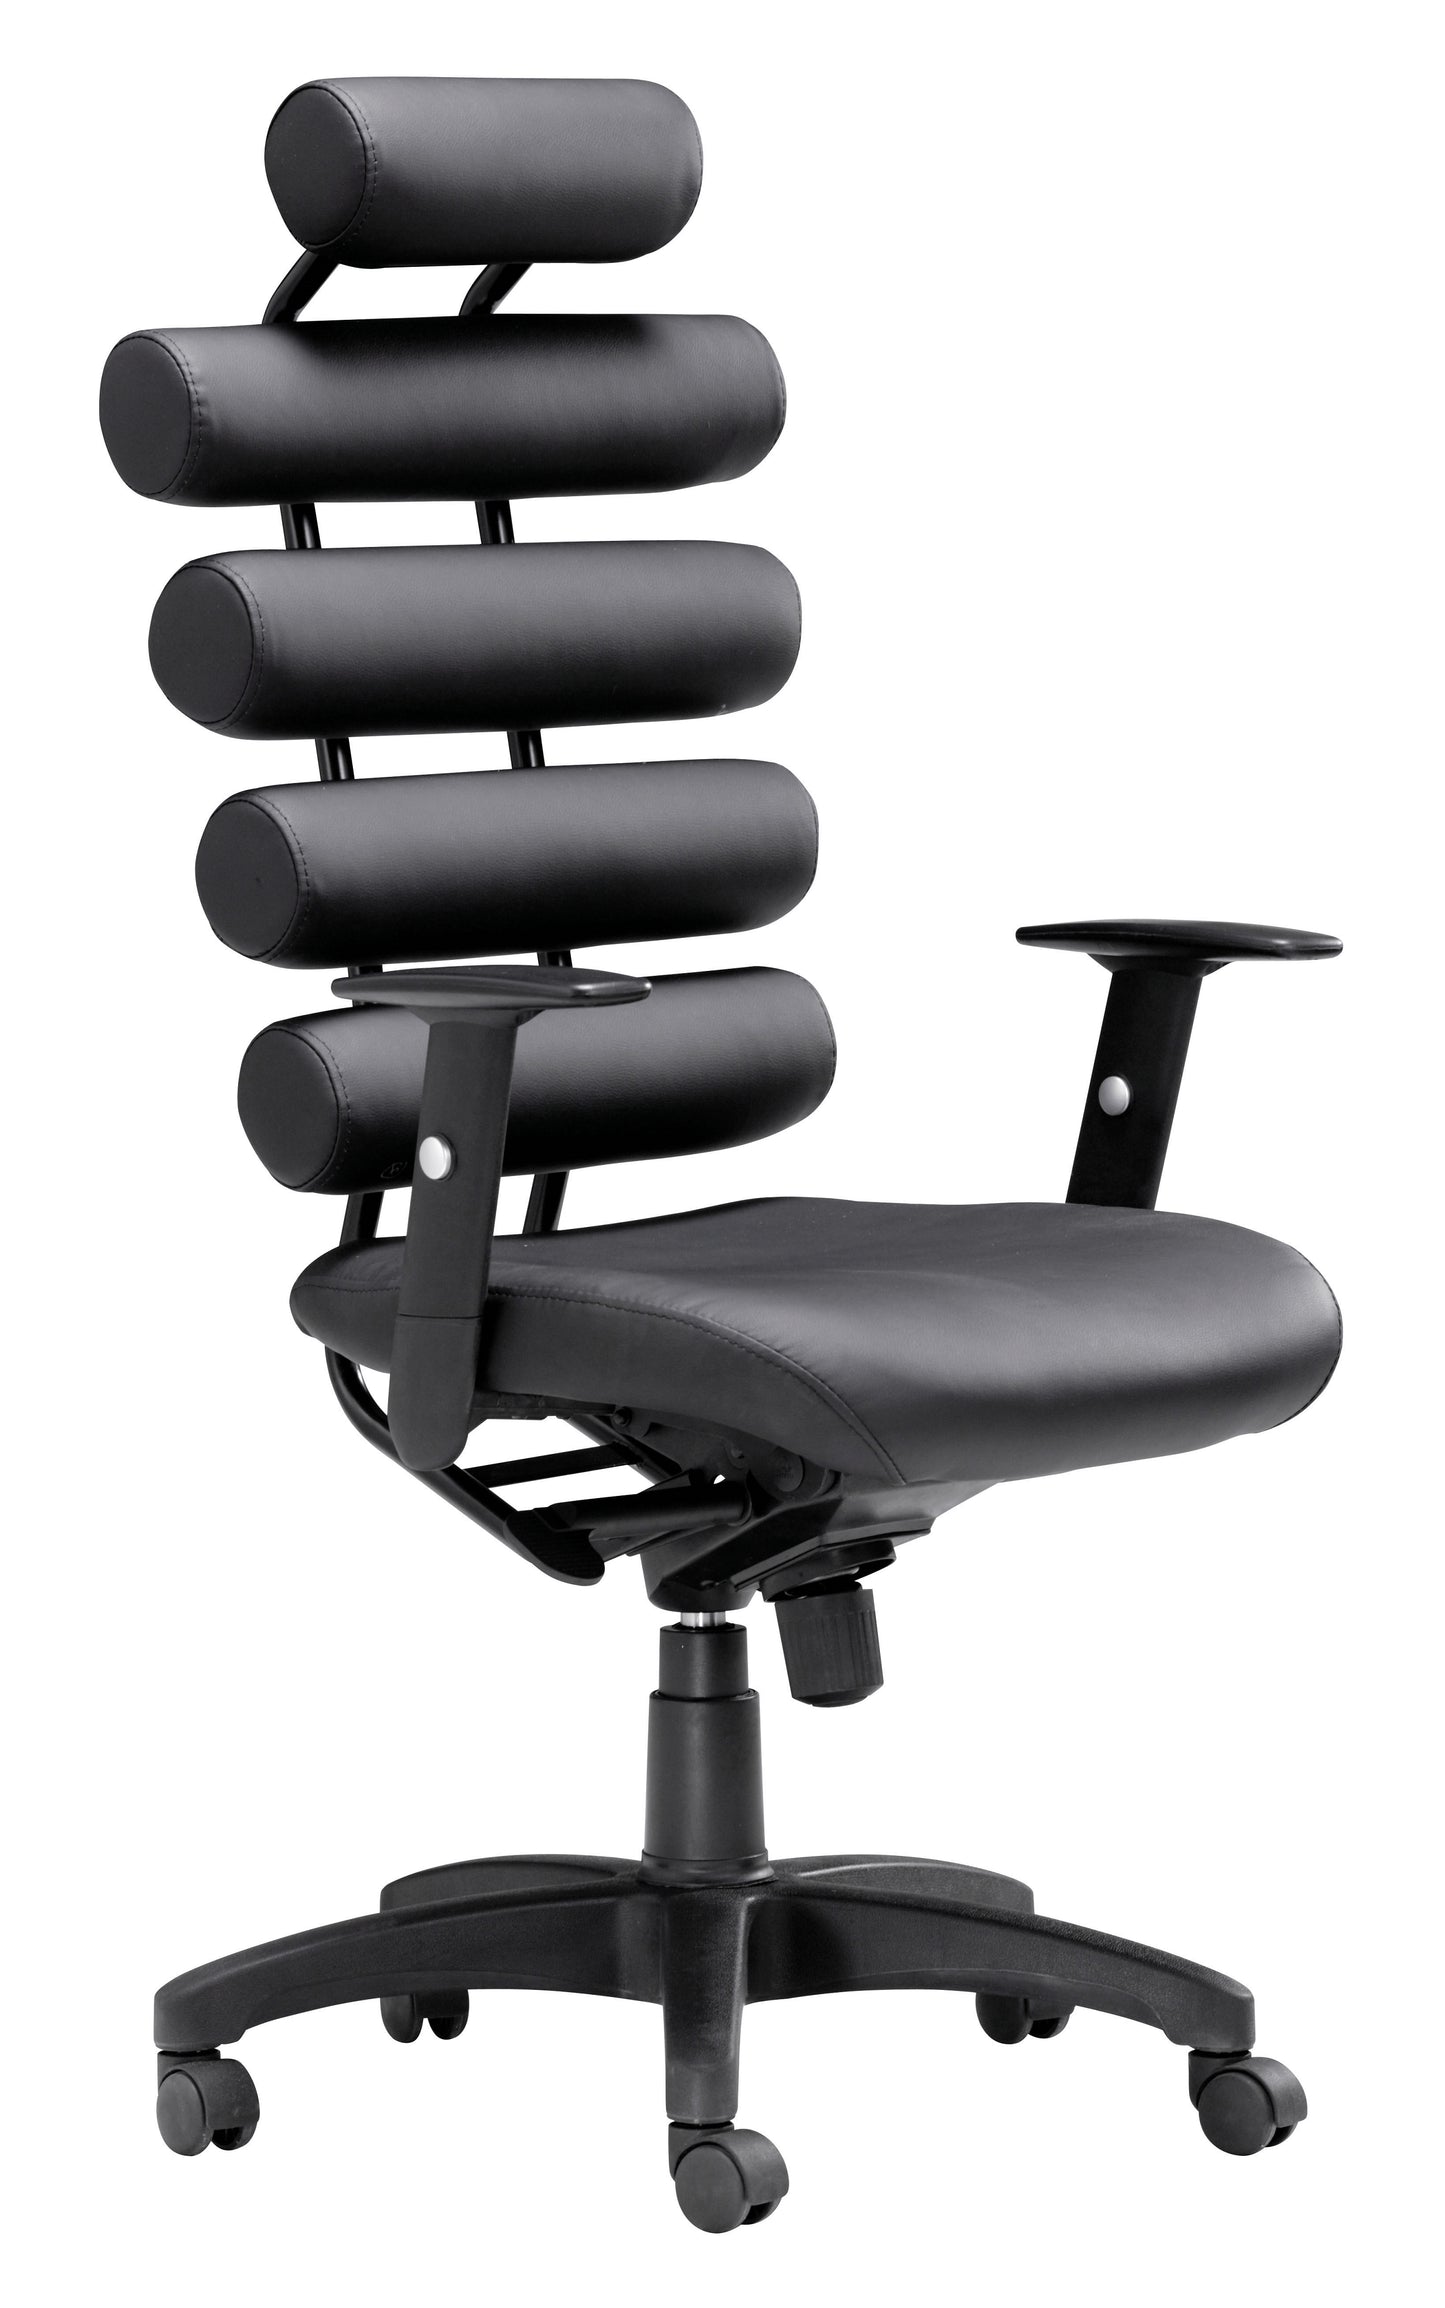 Zuo Unico Office Chair - SKU 205050 - Black